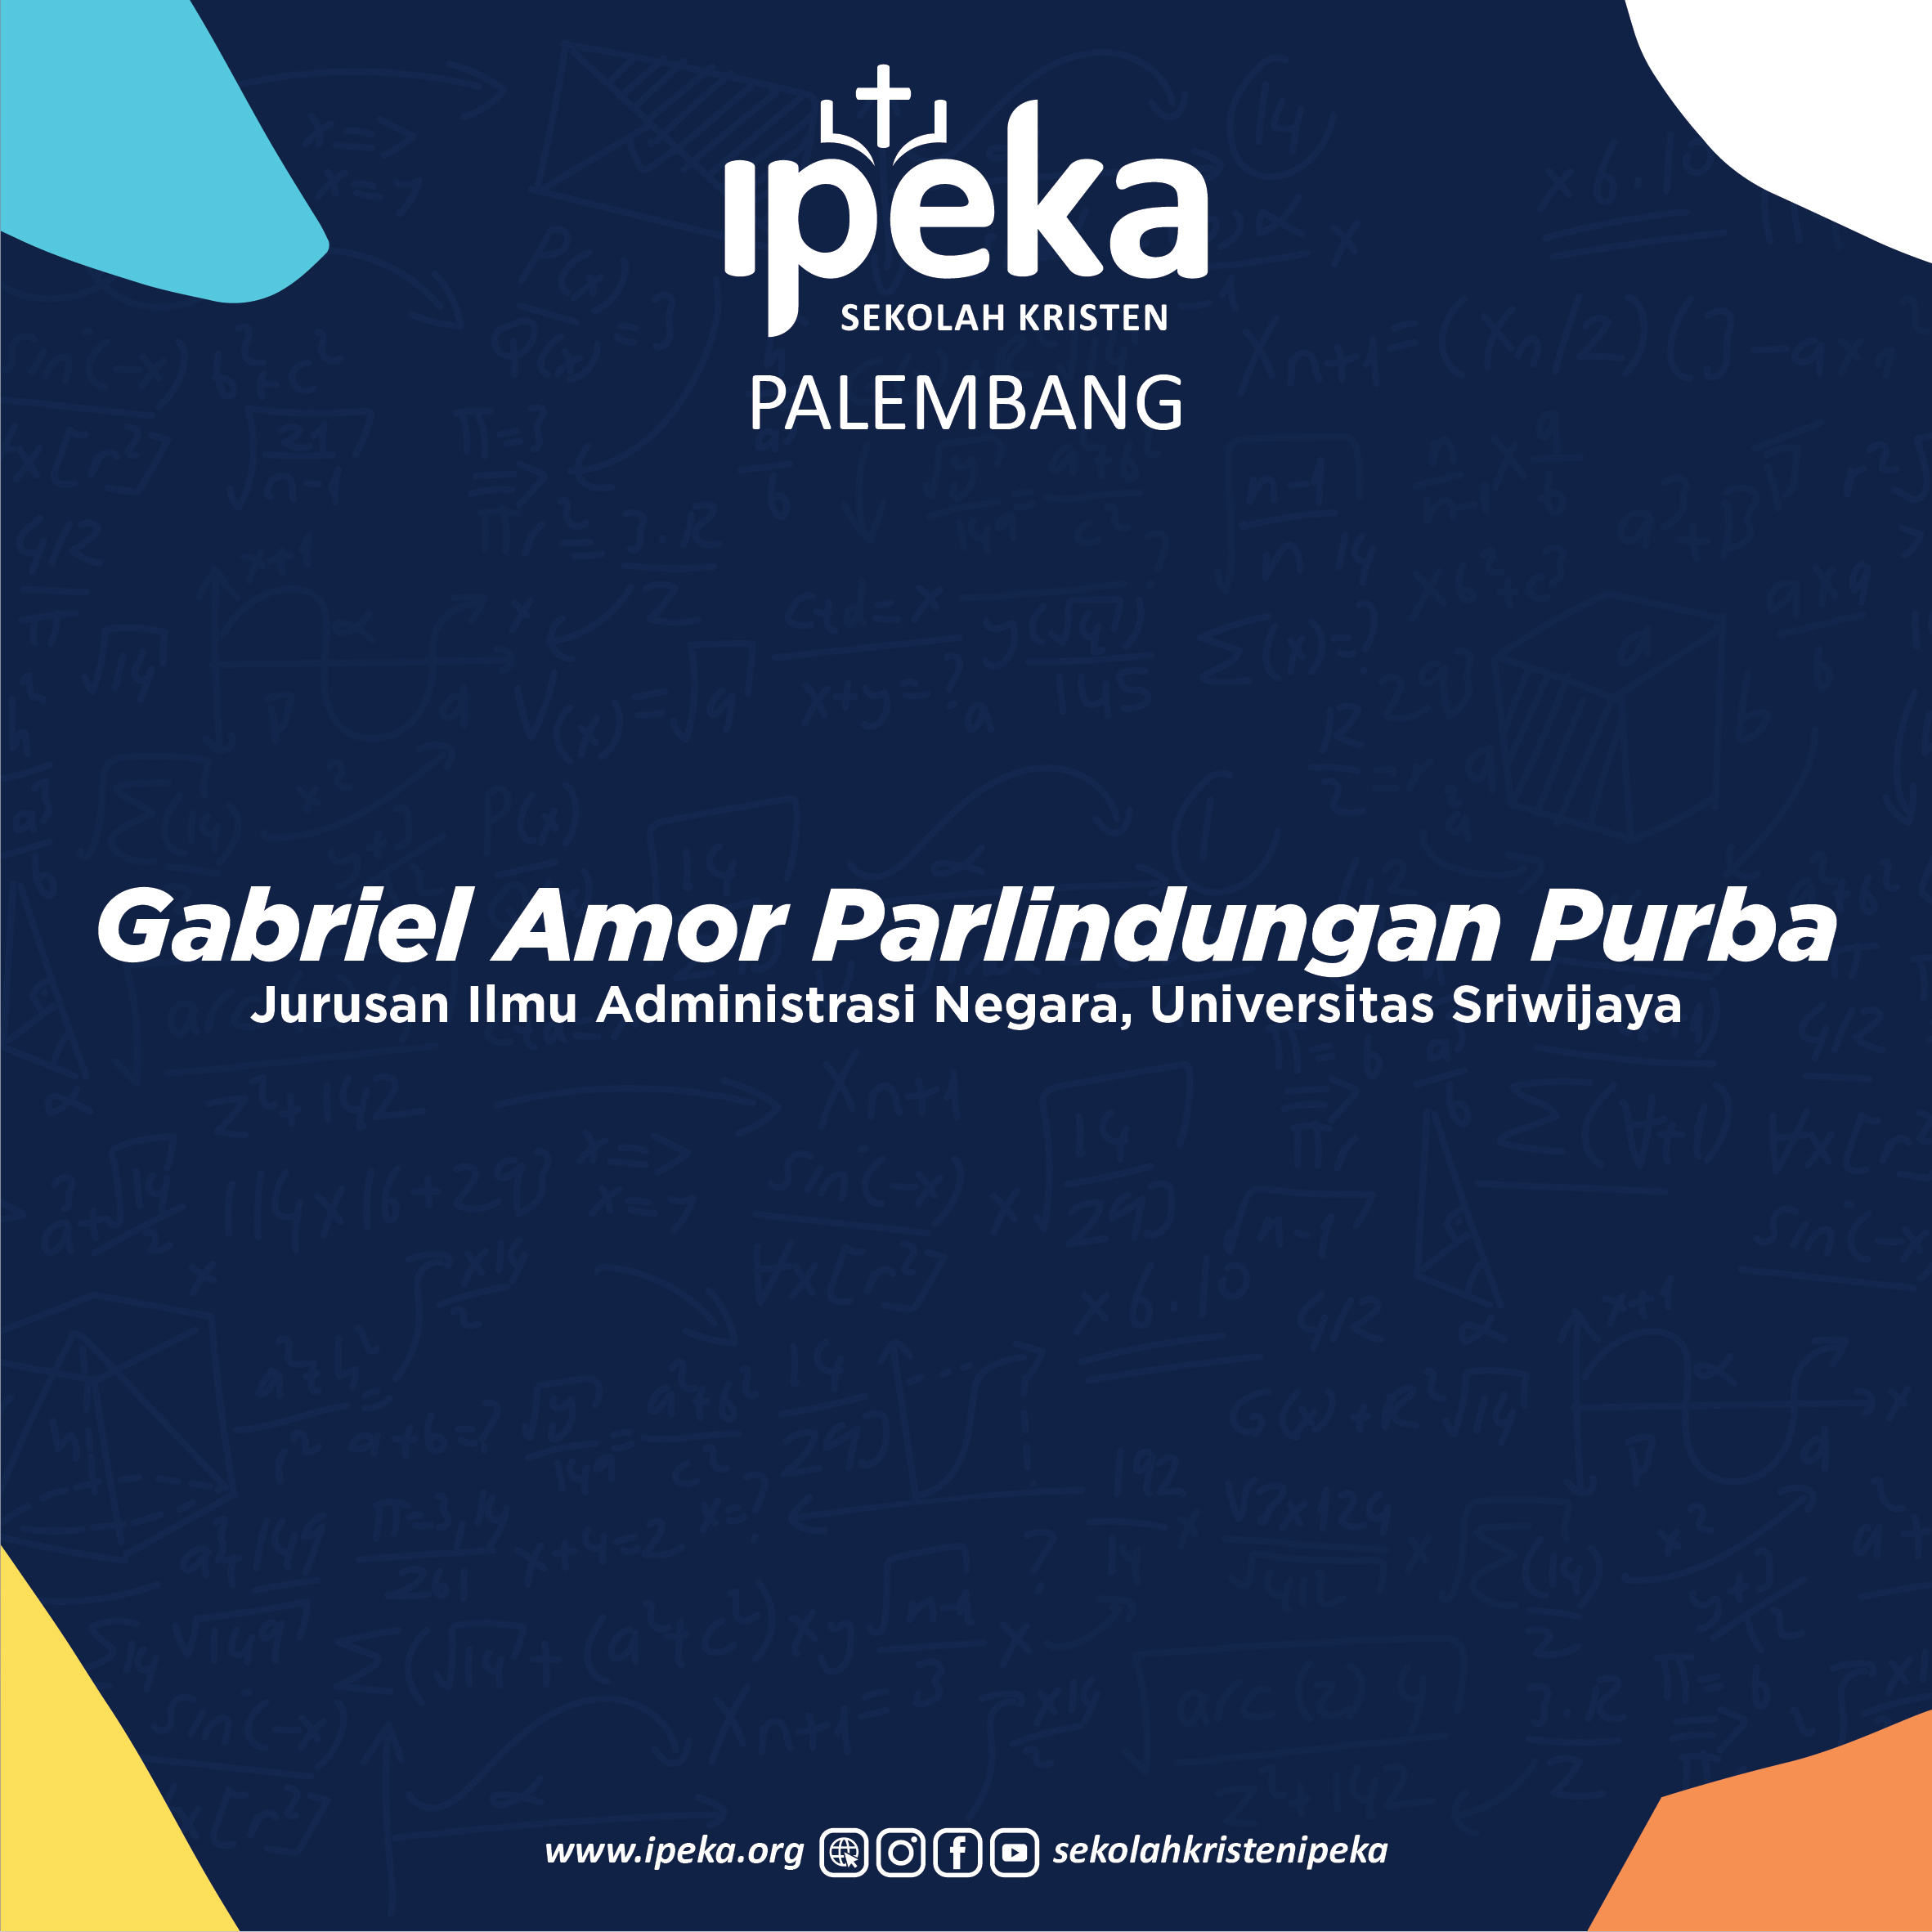 SBMPTN 2021 winner from IPEKA Palembang